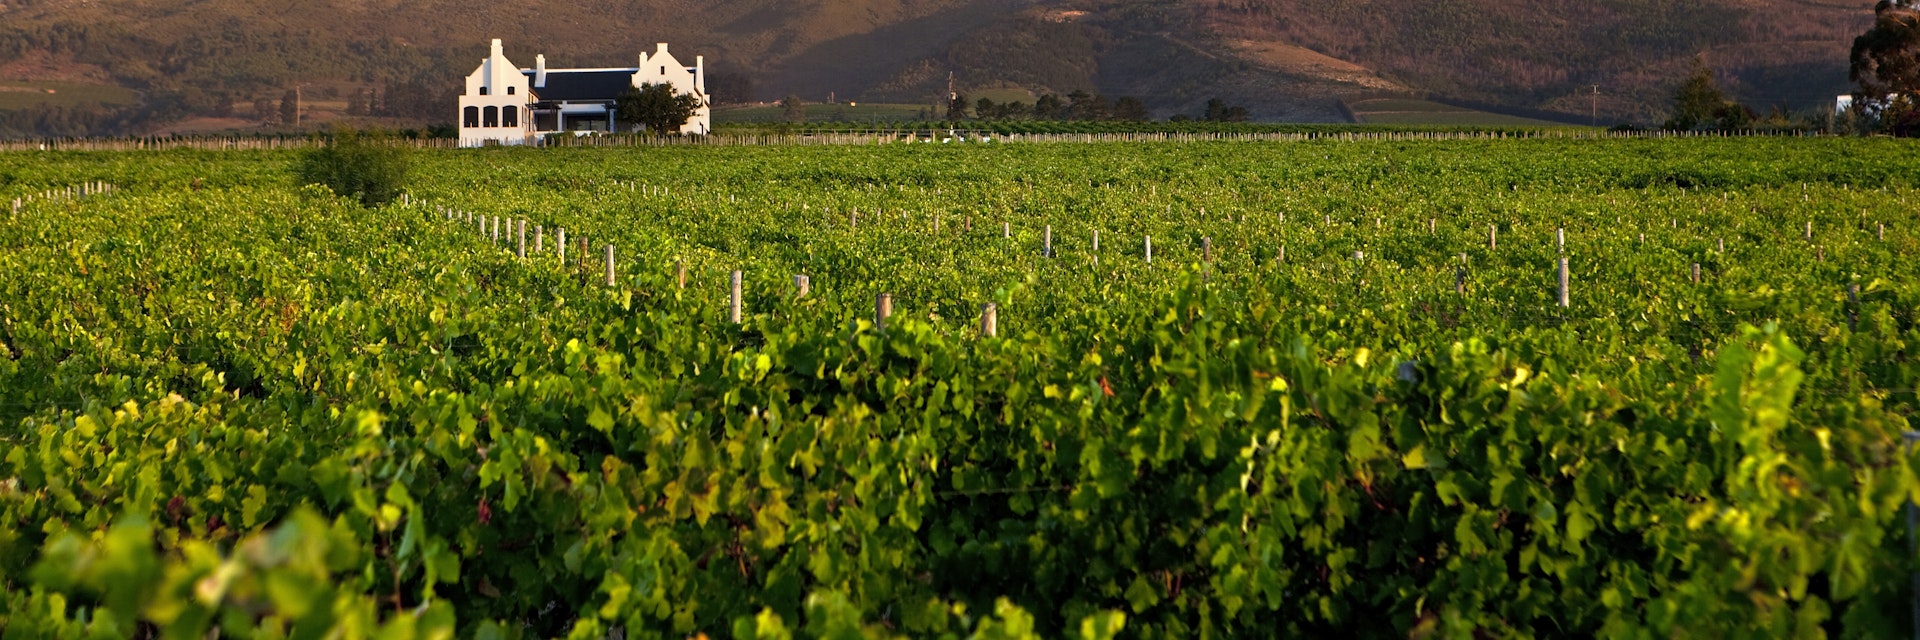 South Africa, Western Cape, near Stellenbosch, Longridge Wine Estate. Homestead and vineyards.